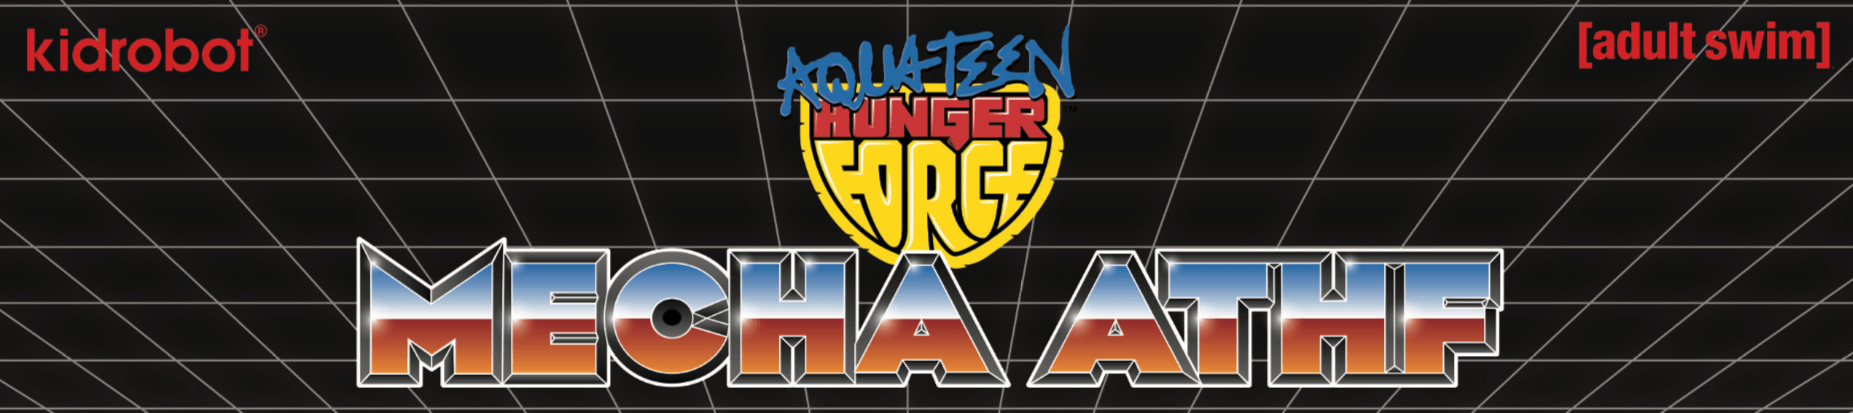 Aqua Teen Hunger Force Logo - Aqua Teen Hunger Force Toys & Collectibles from Kidrobot x Adult Swim